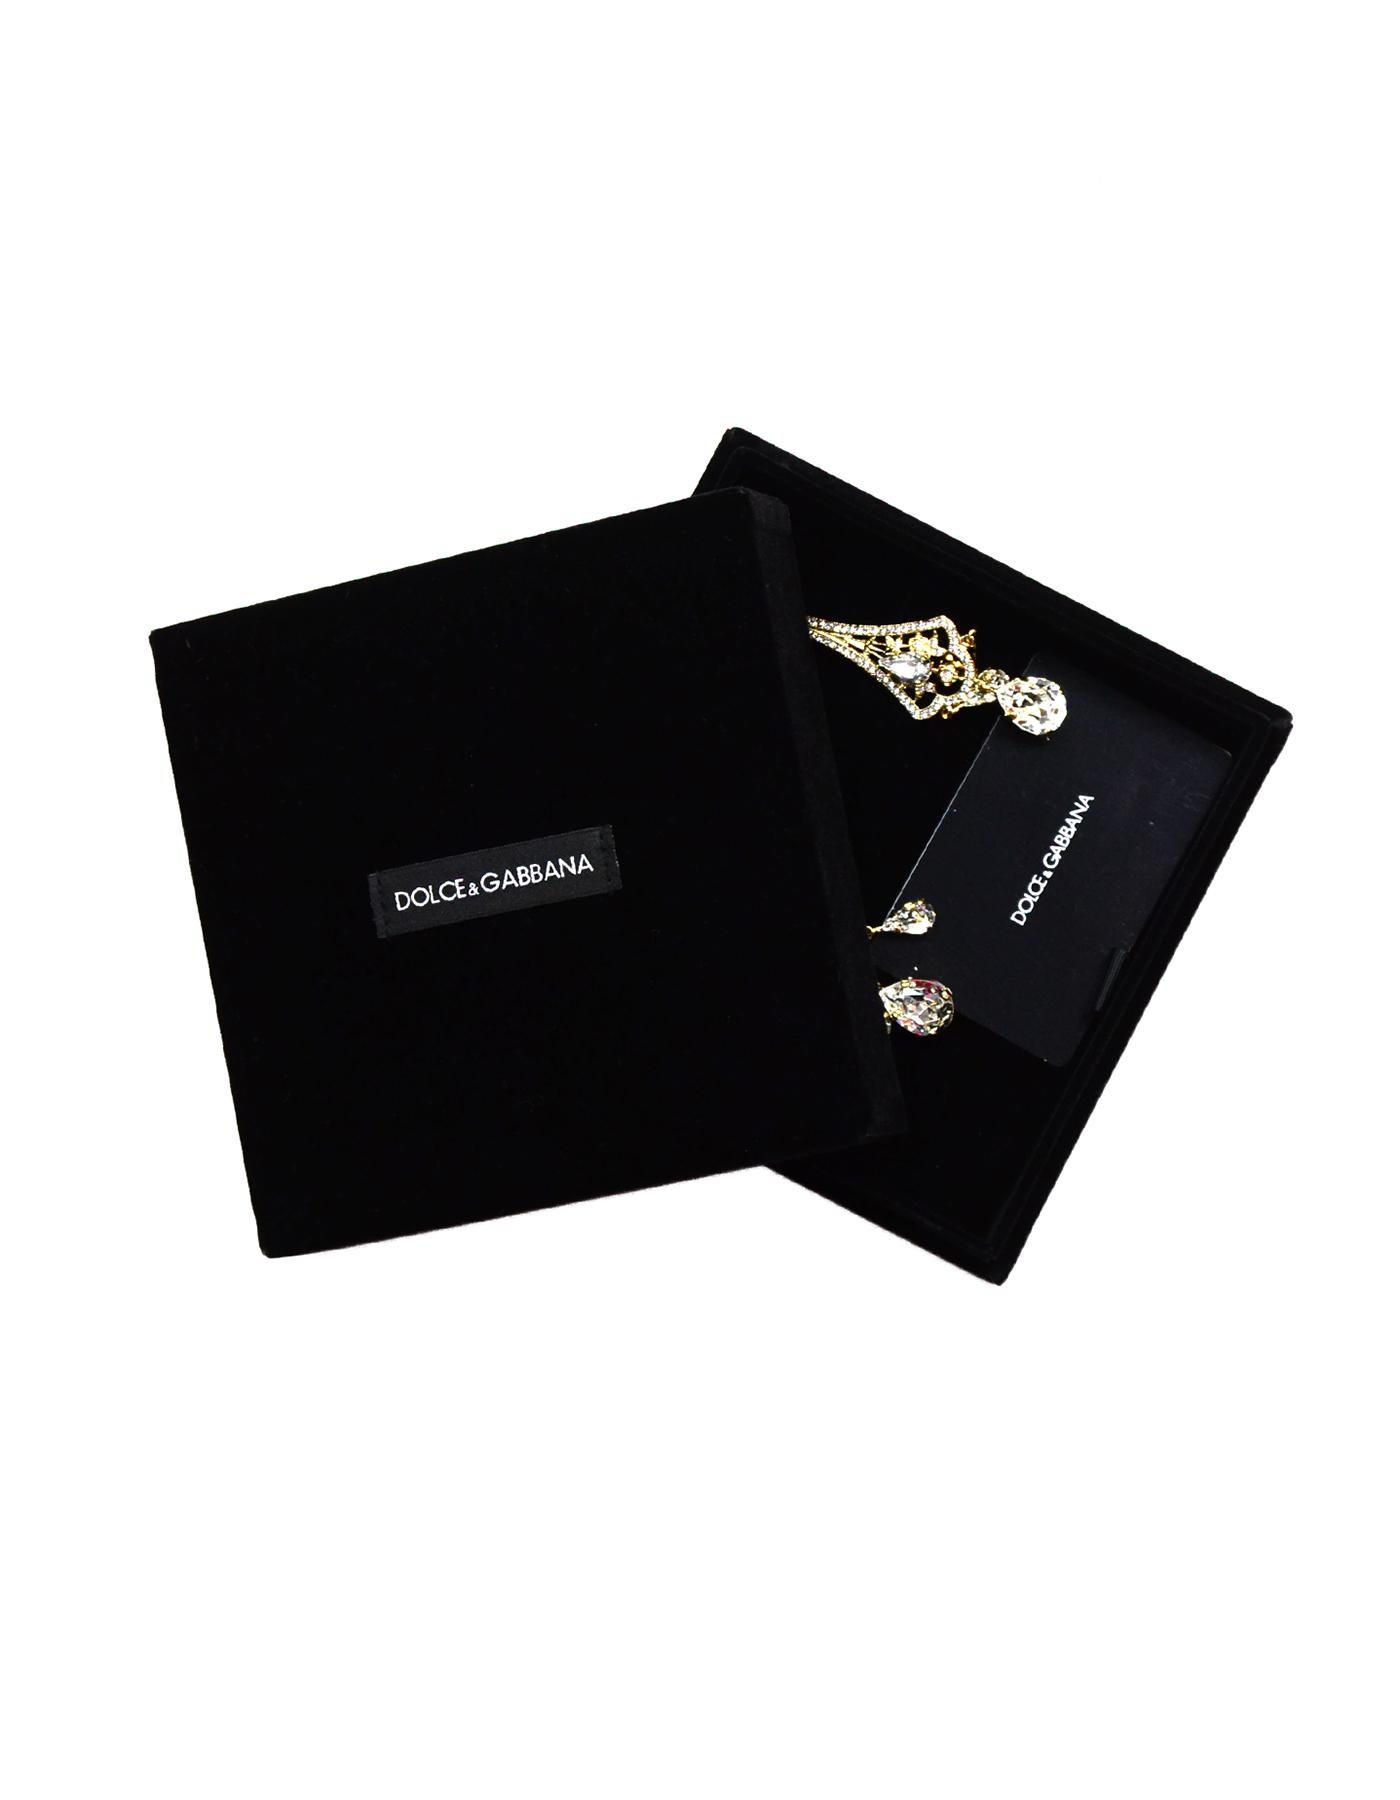 Dolce & Gabbana Goldtone Filigrana Swarovski Crystal Pendant Earrings

Made In:  Italy
Color: Gold, crystal 
Materials:  Goldtone metal, Swarovski crystal 
Hallmarks:  On back of one earring- 